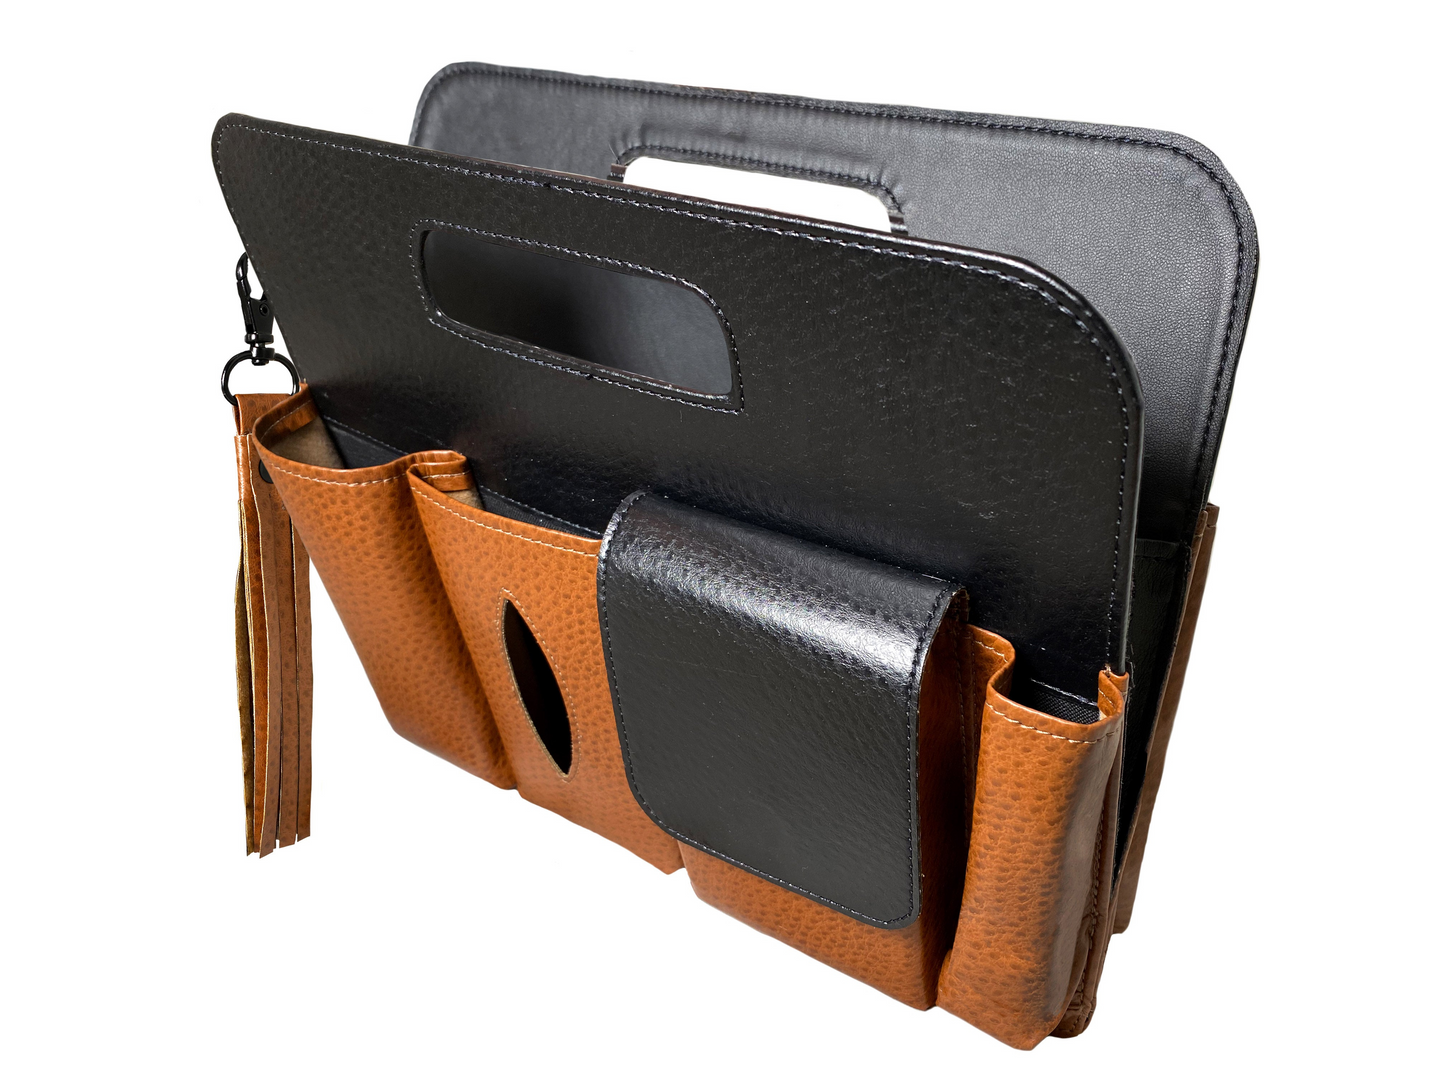 Handbag Insert: 2-in-1 Bag Tote Organiser | Shop Today. Get it Tomorrow! |  takealot.com